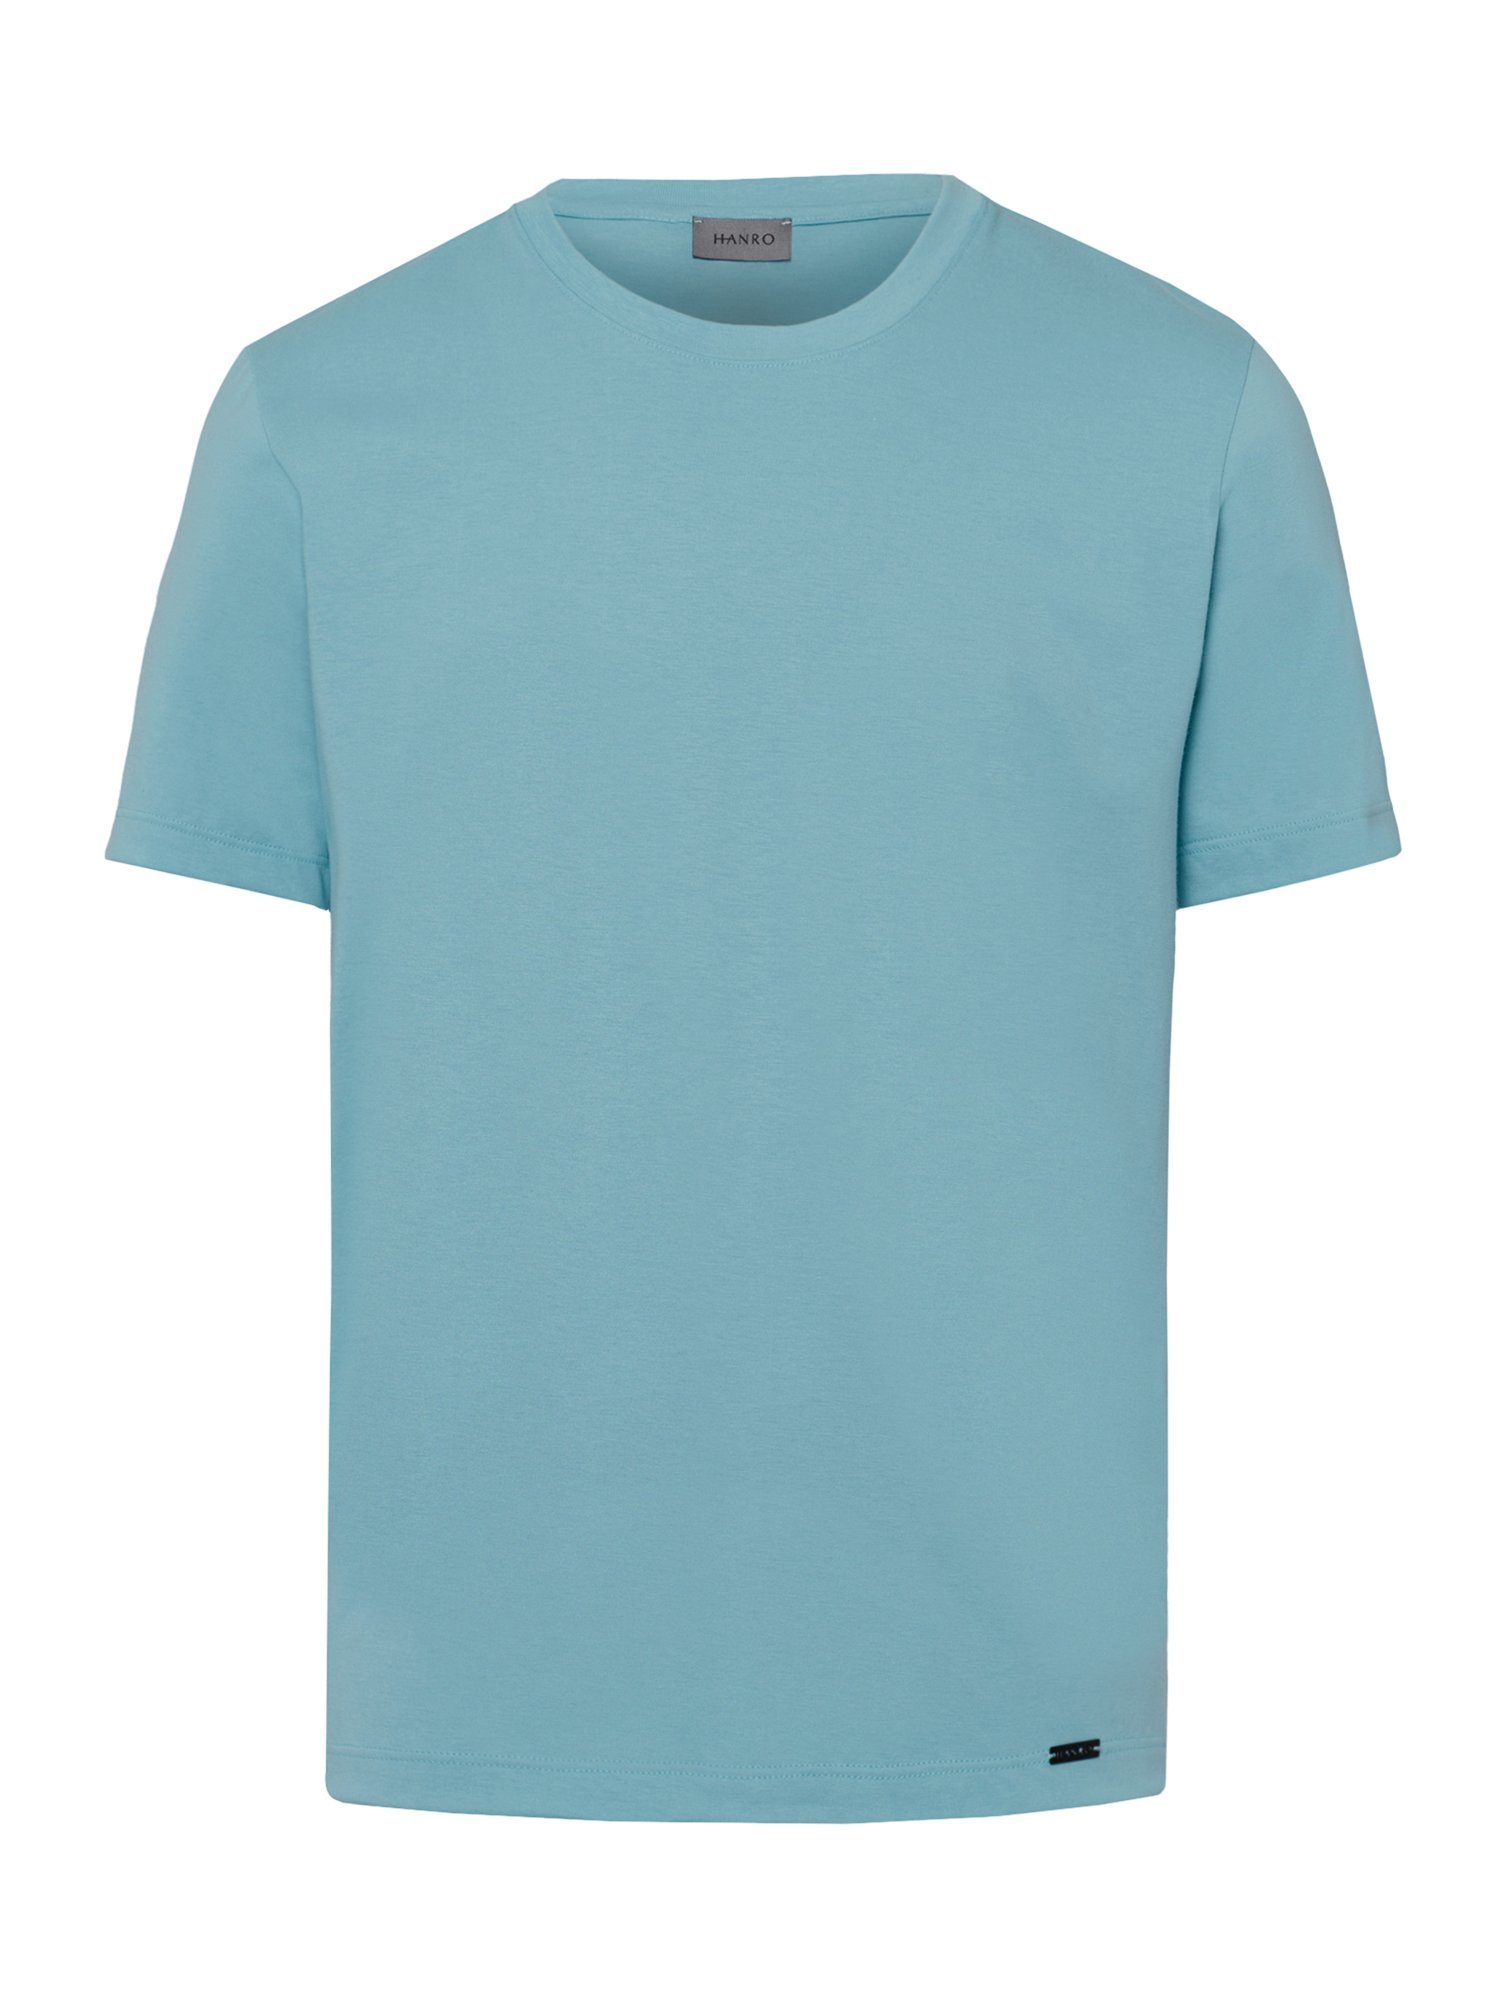 Hanro T-Shirt Living Shirts moss | T-Shirts